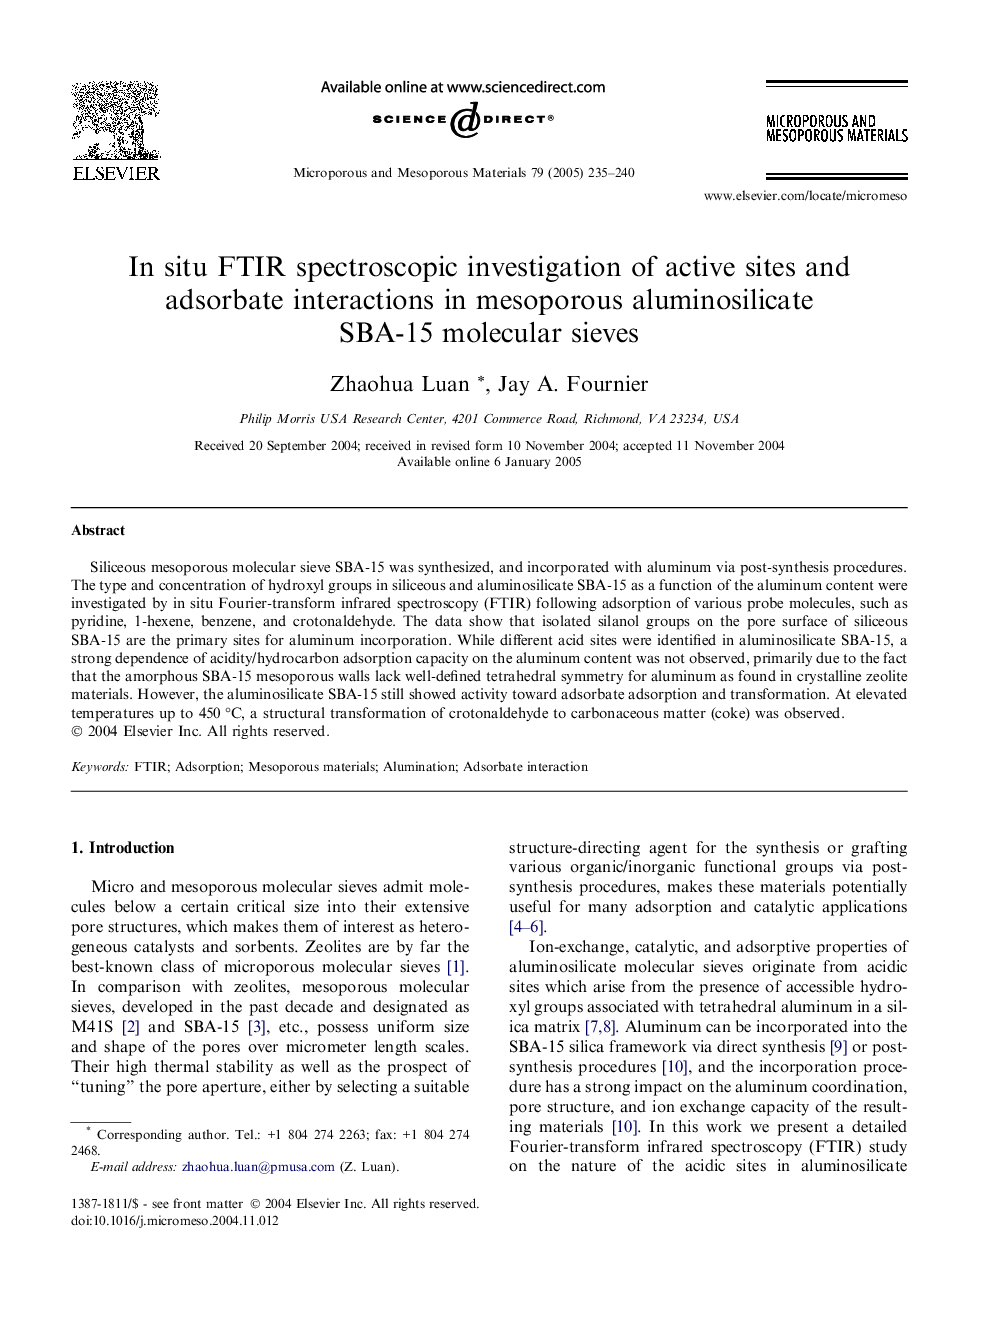 In situ FTIR spectroscopic investigation of active sites and adsorbate interactions in mesoporous aluminosilicate SBA-15 molecular sieves